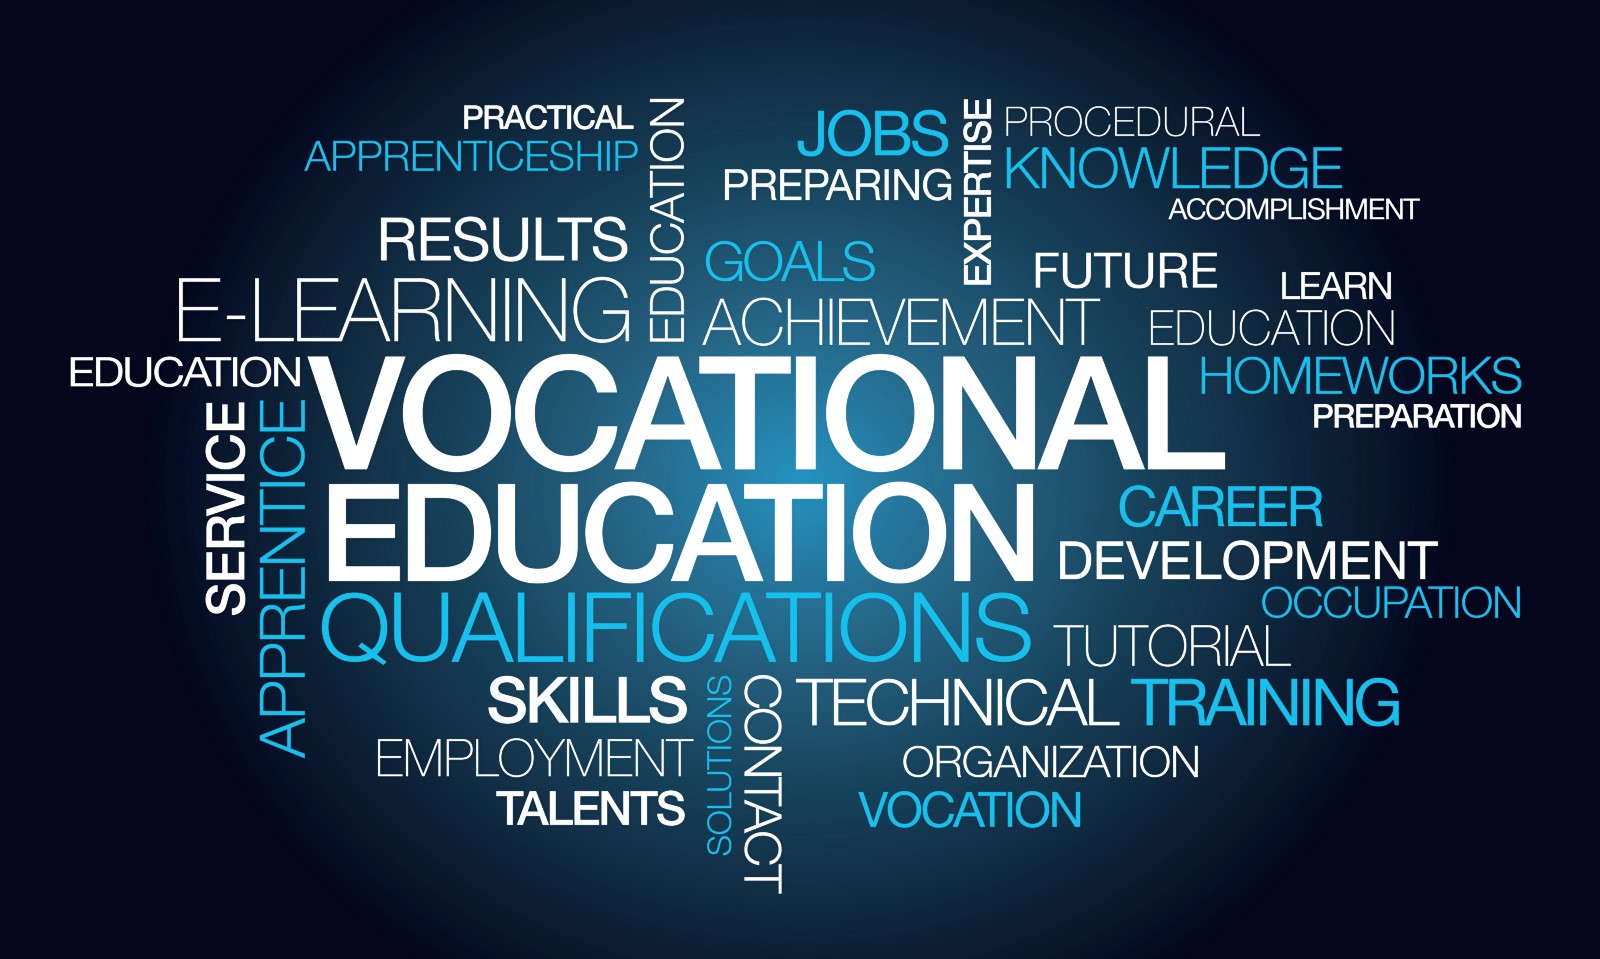 Employment opportunities for VET students in EU